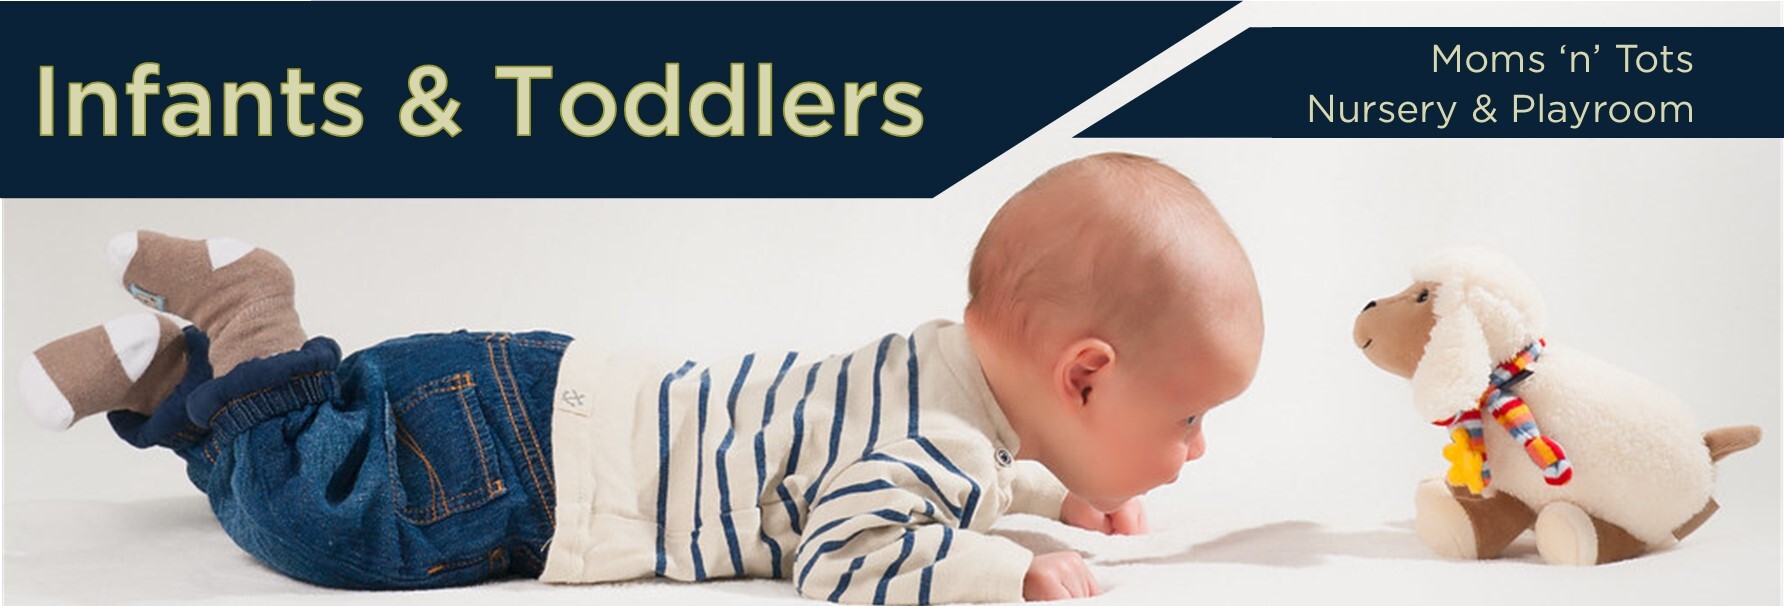 Infants & Toddlers Banner